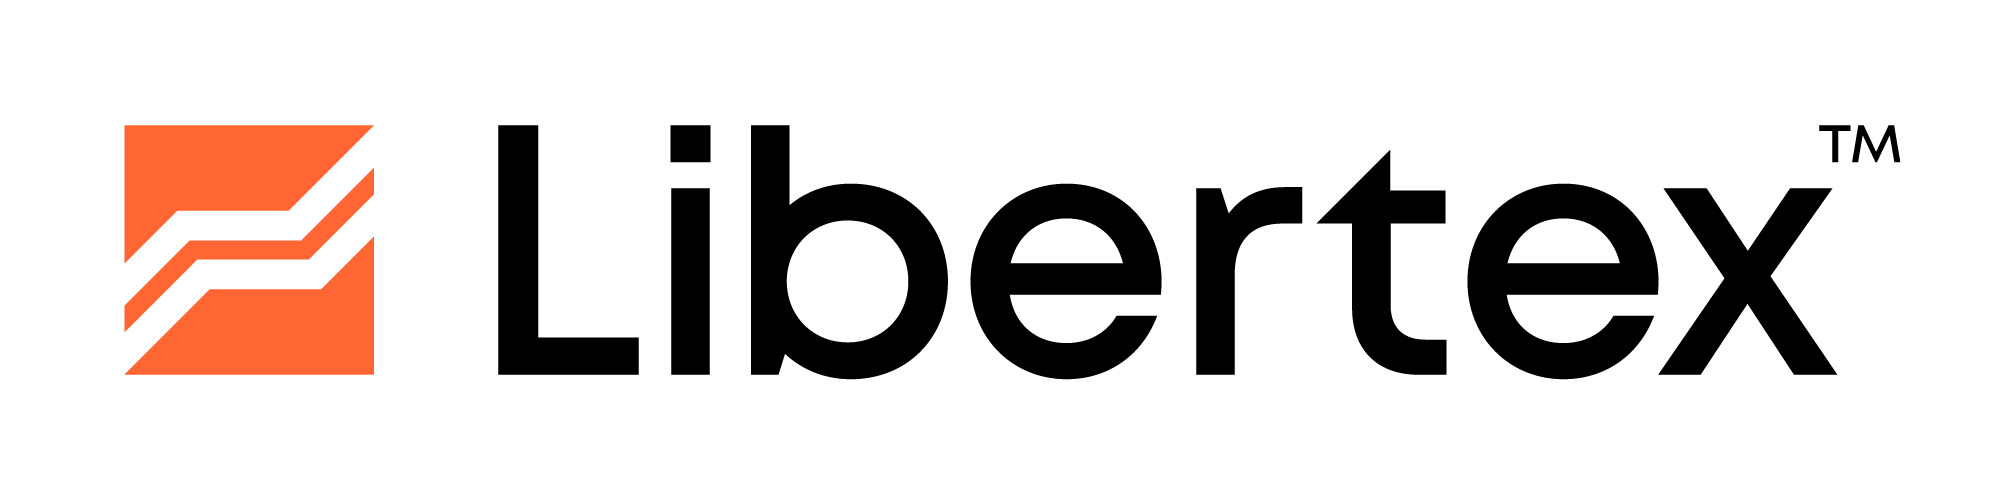 libertex logotipo portugal